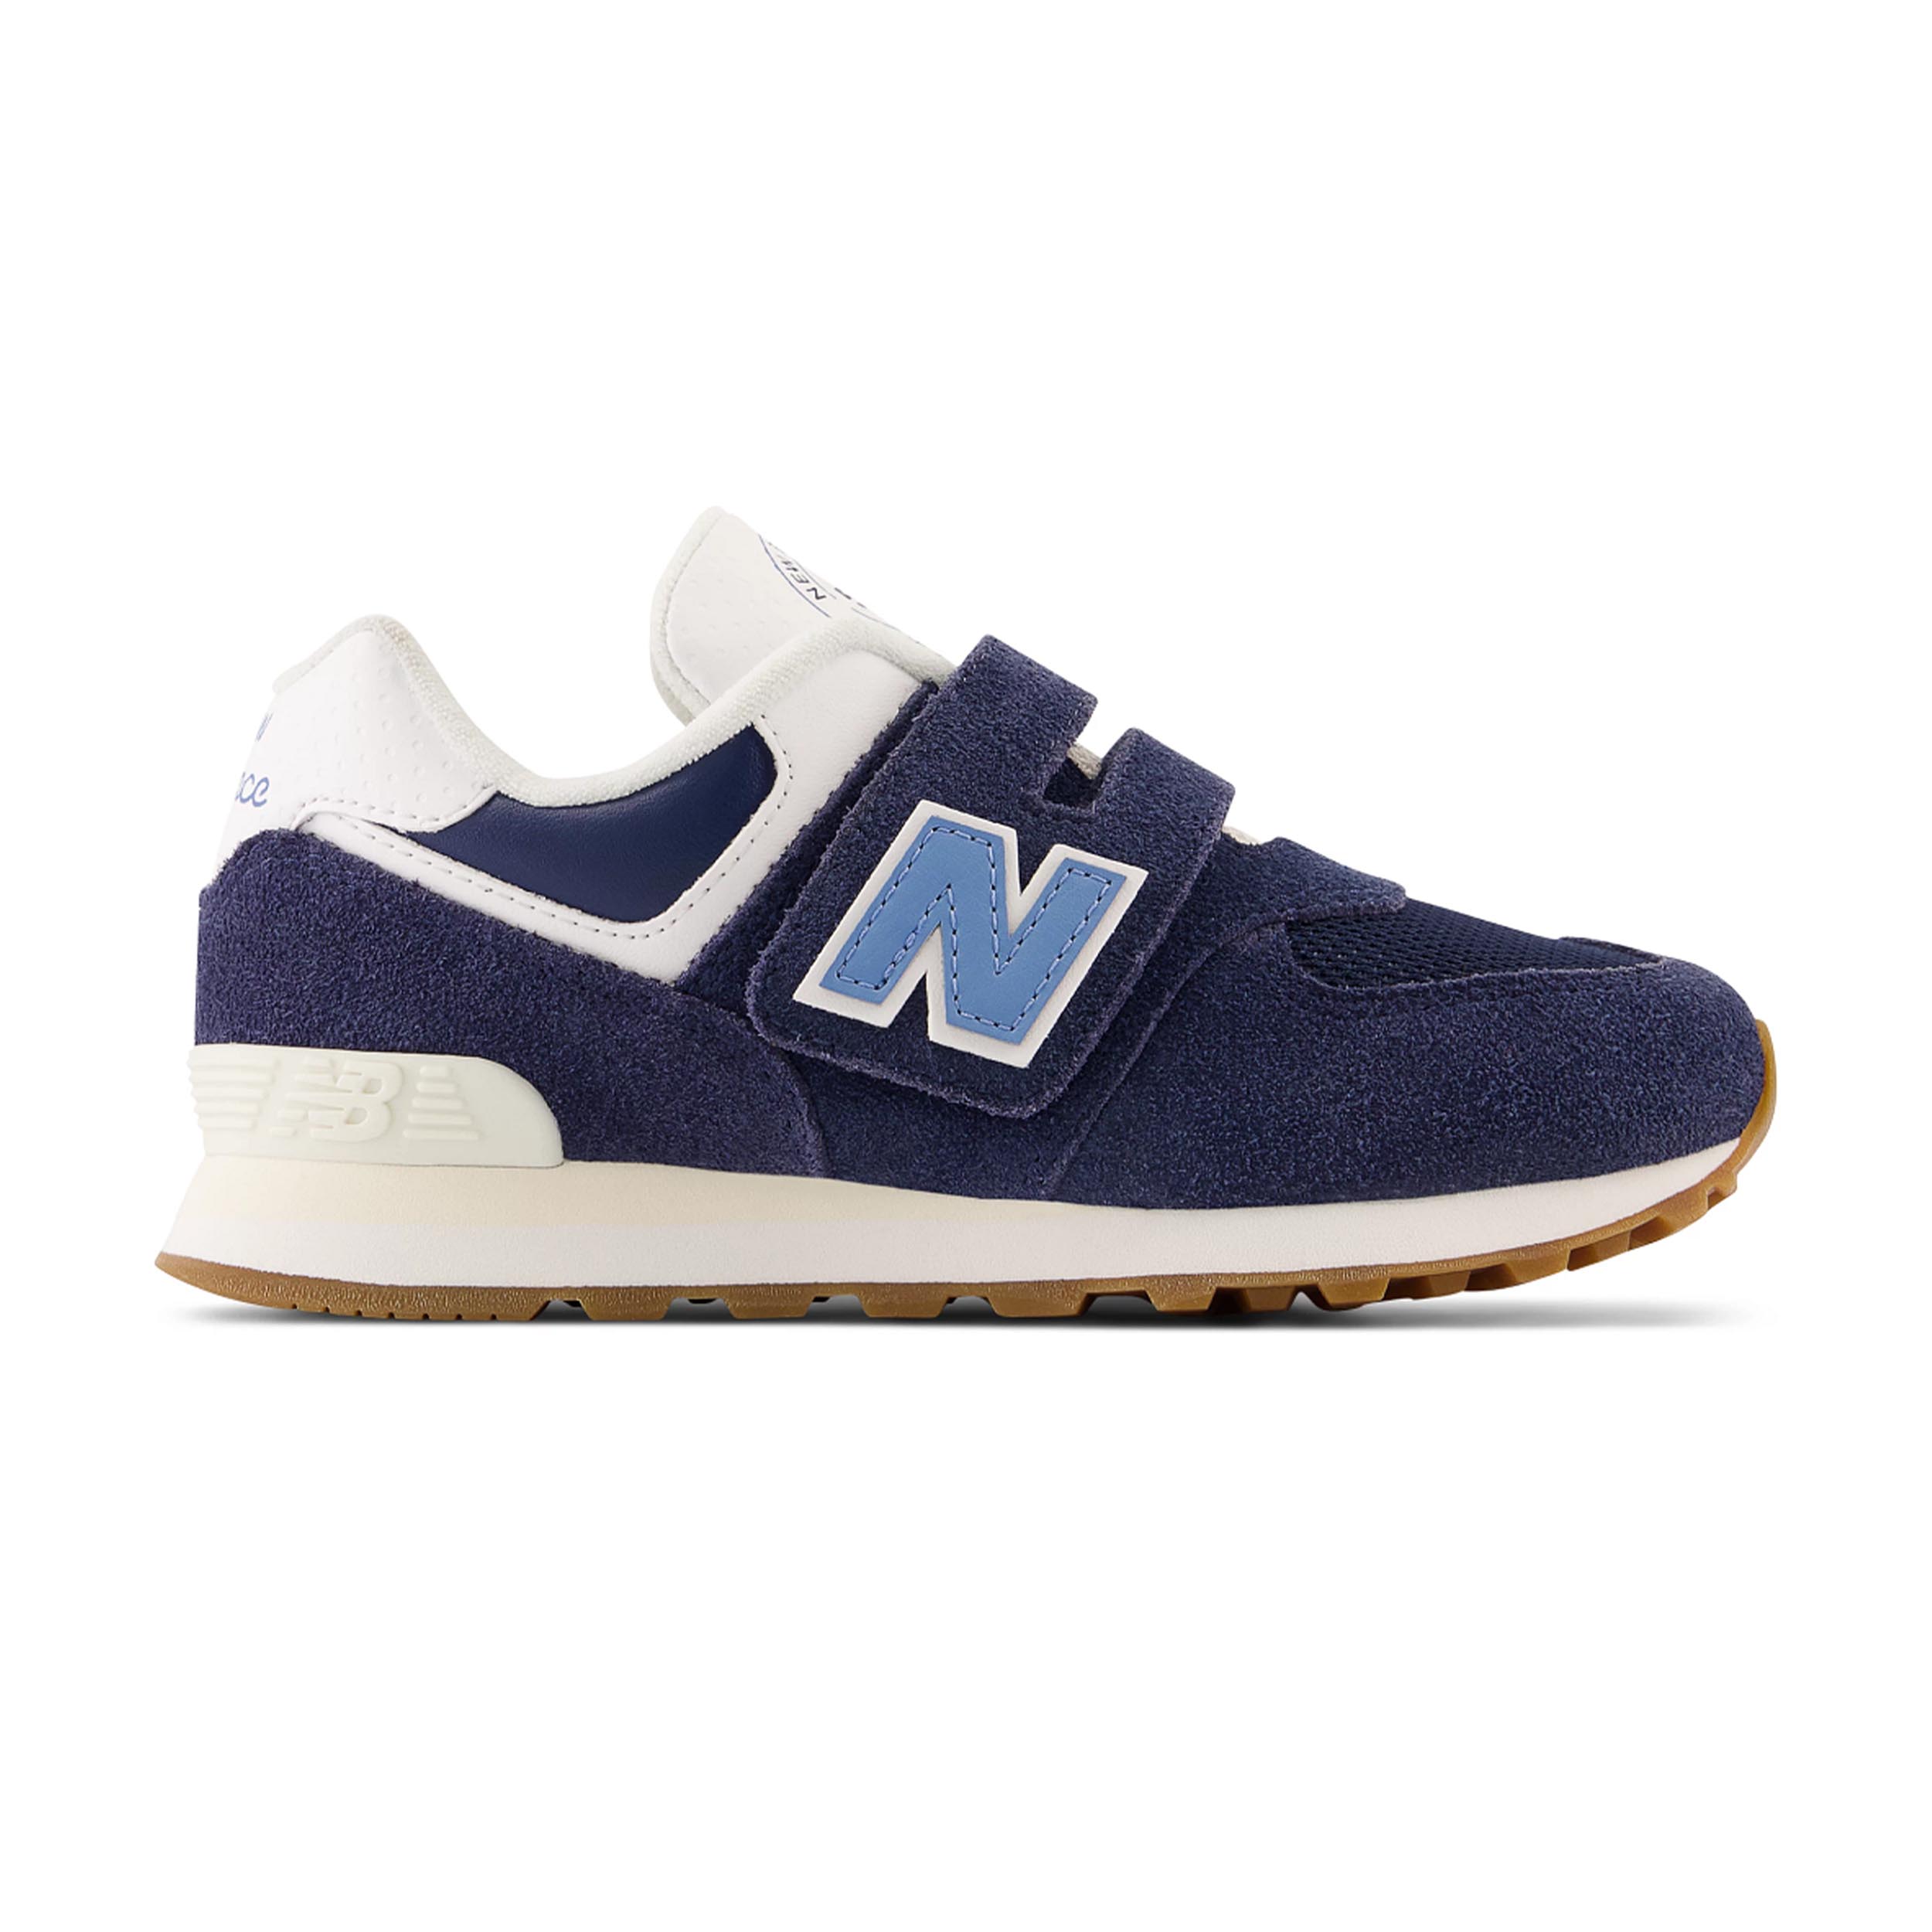 New Balance 574 Sneaker Navy Heritage Blue